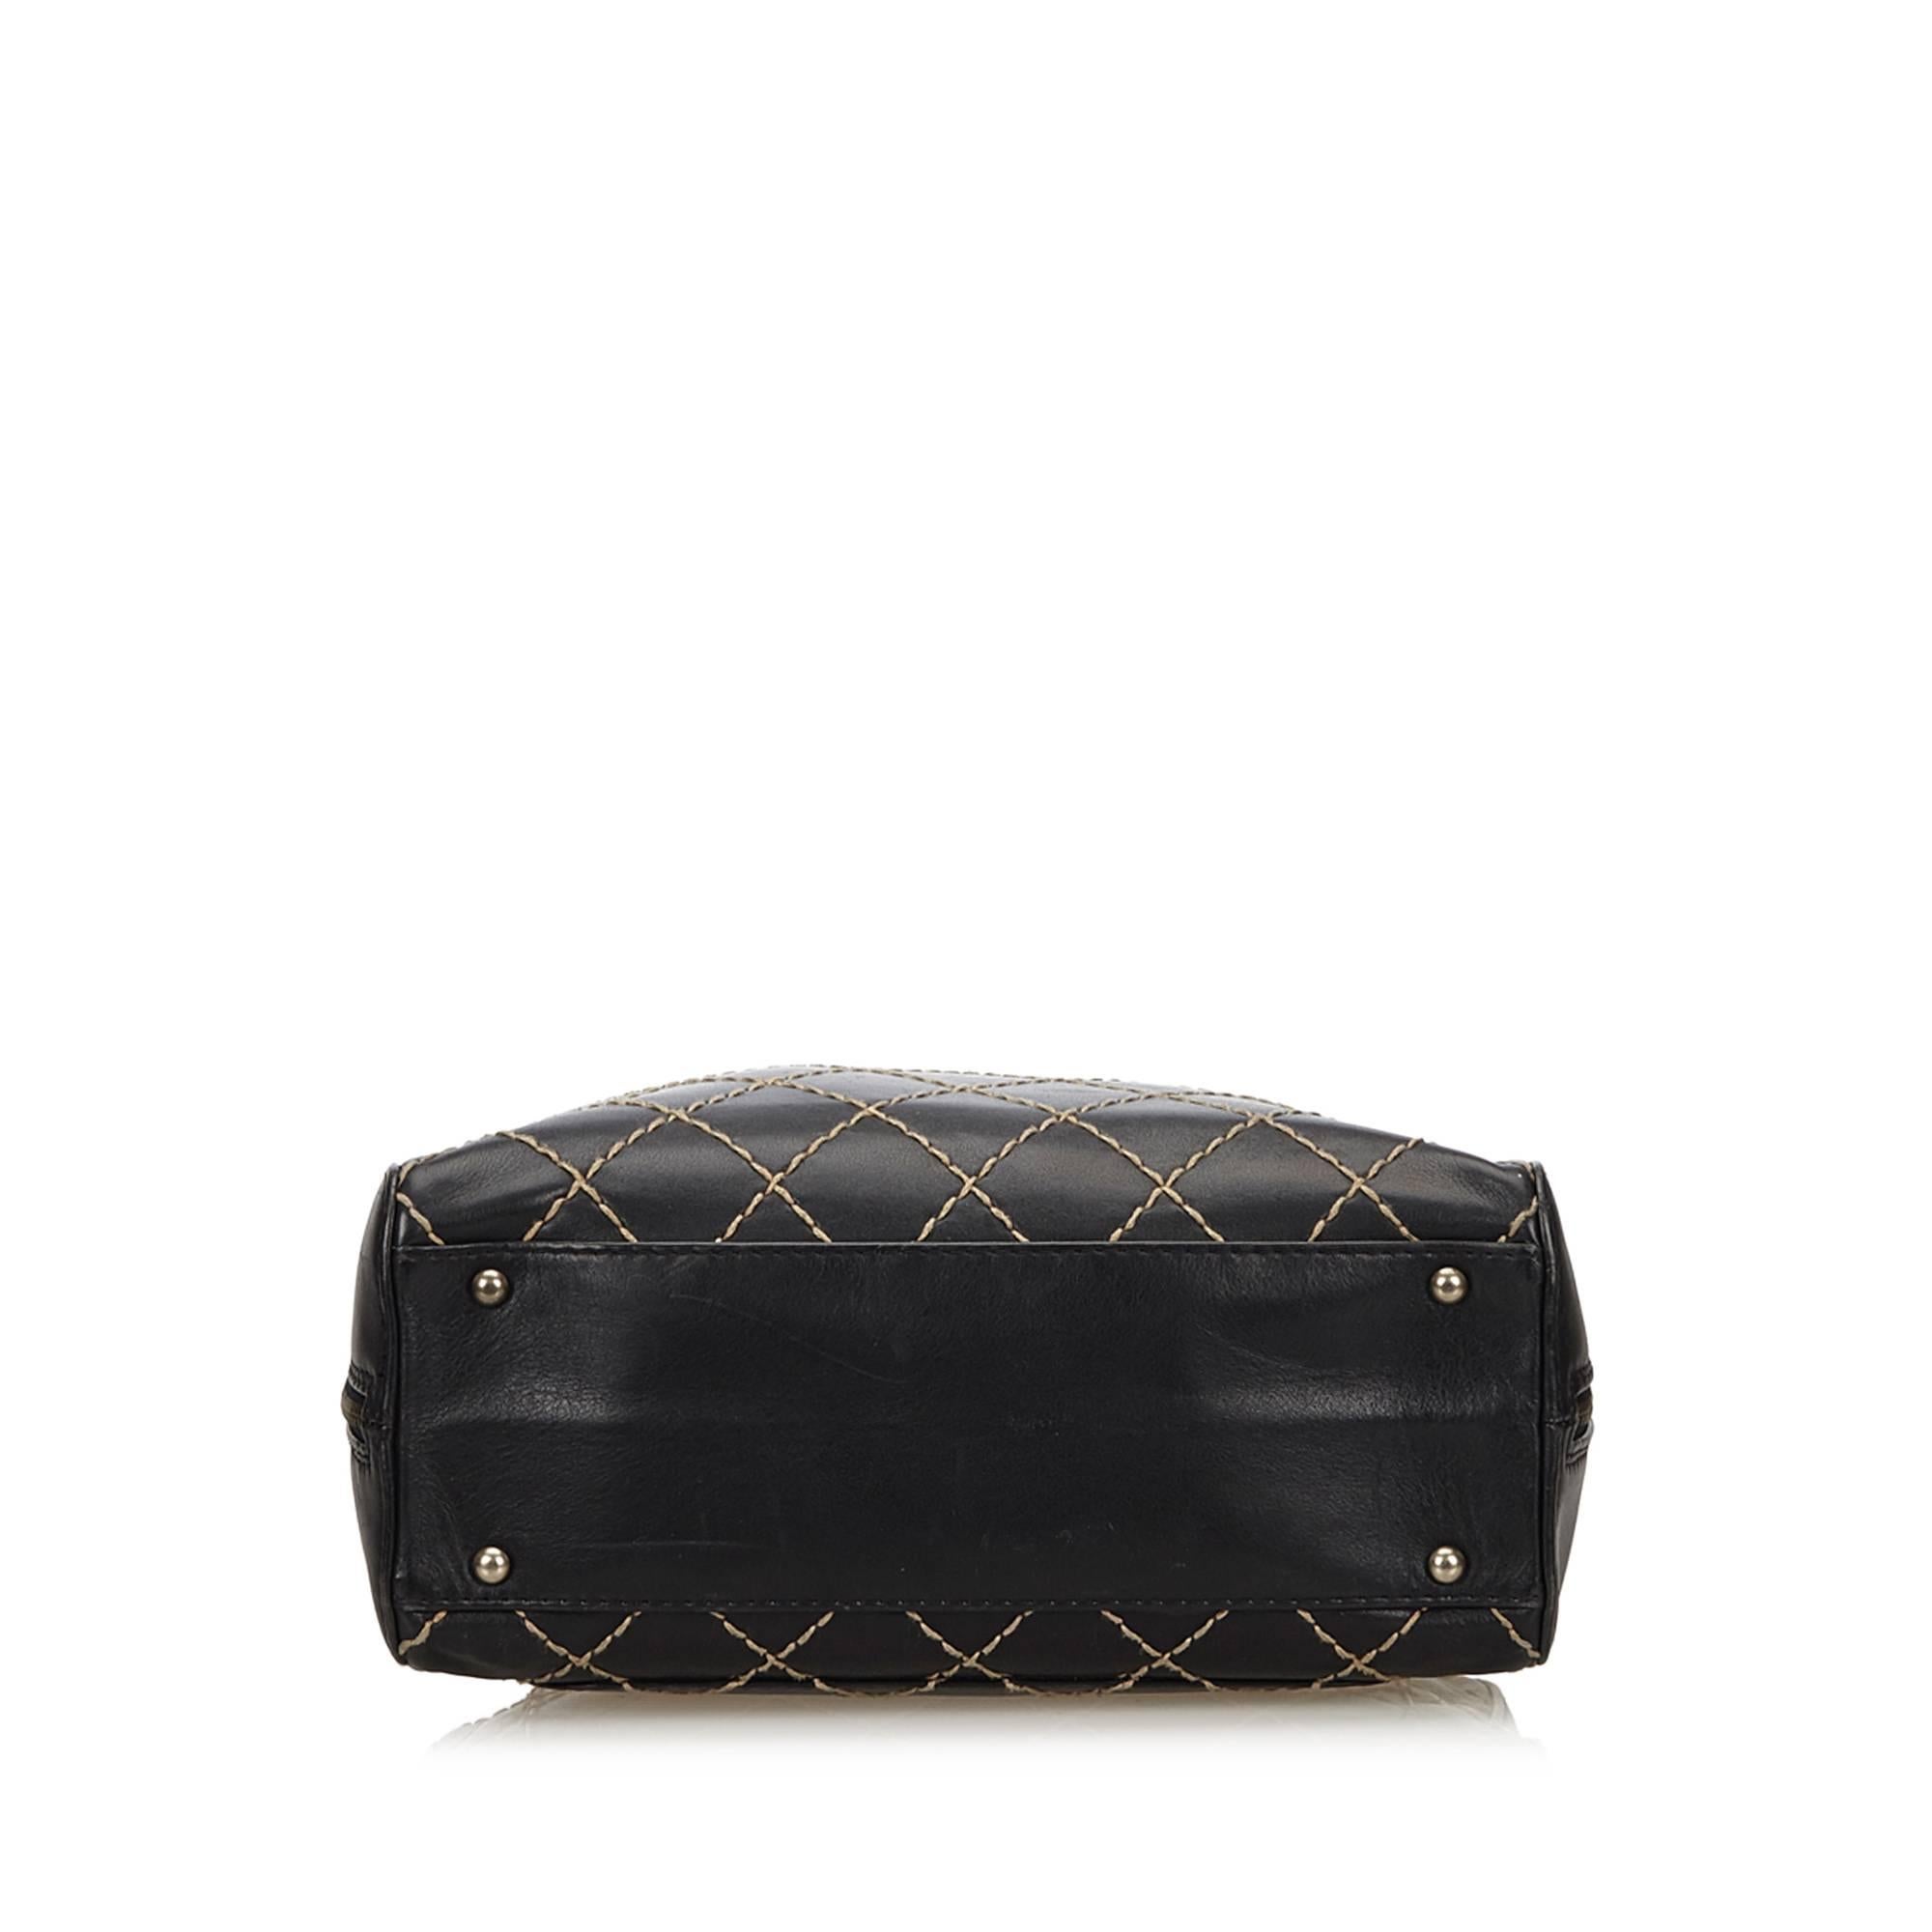 Women's or Men's Chanel Black Lambskin Leather Surpique Handbag For Sale